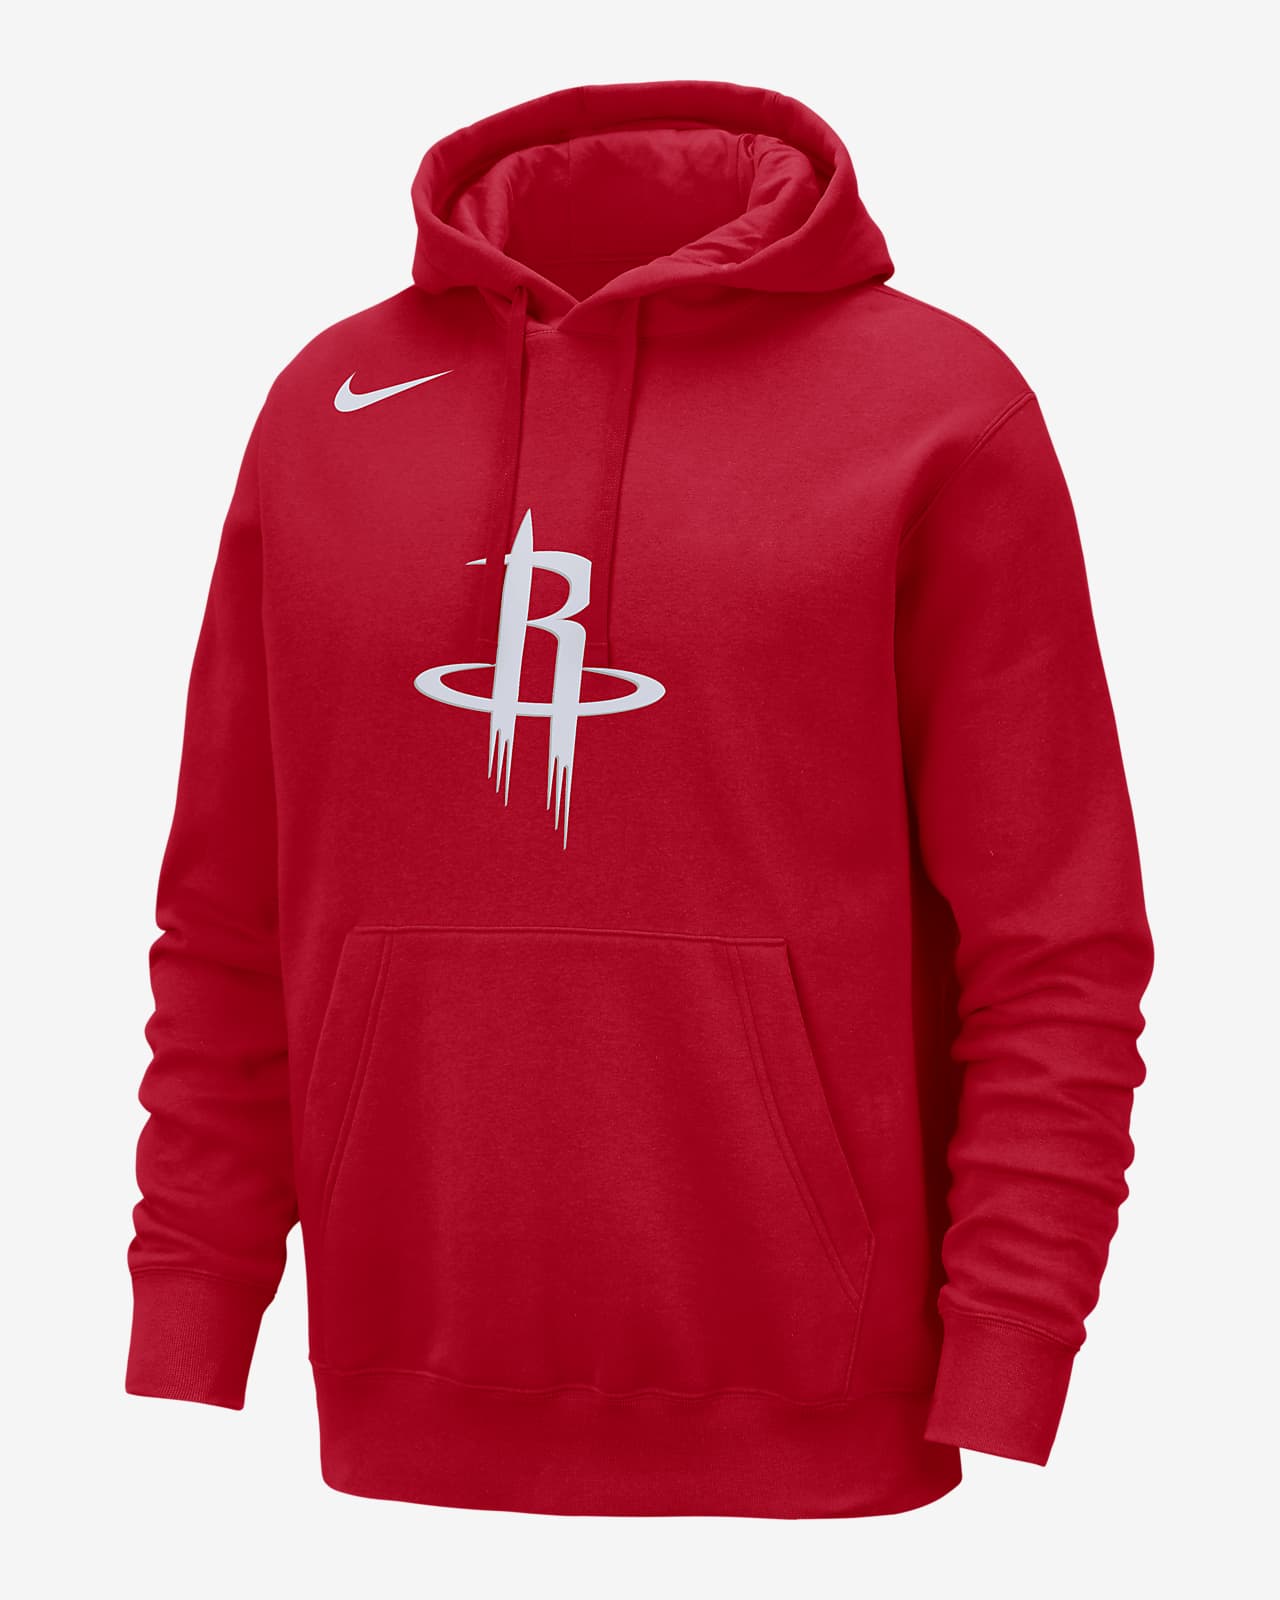 Shirts & Tops, Houston Rockets Hoodie Size Kids Xl